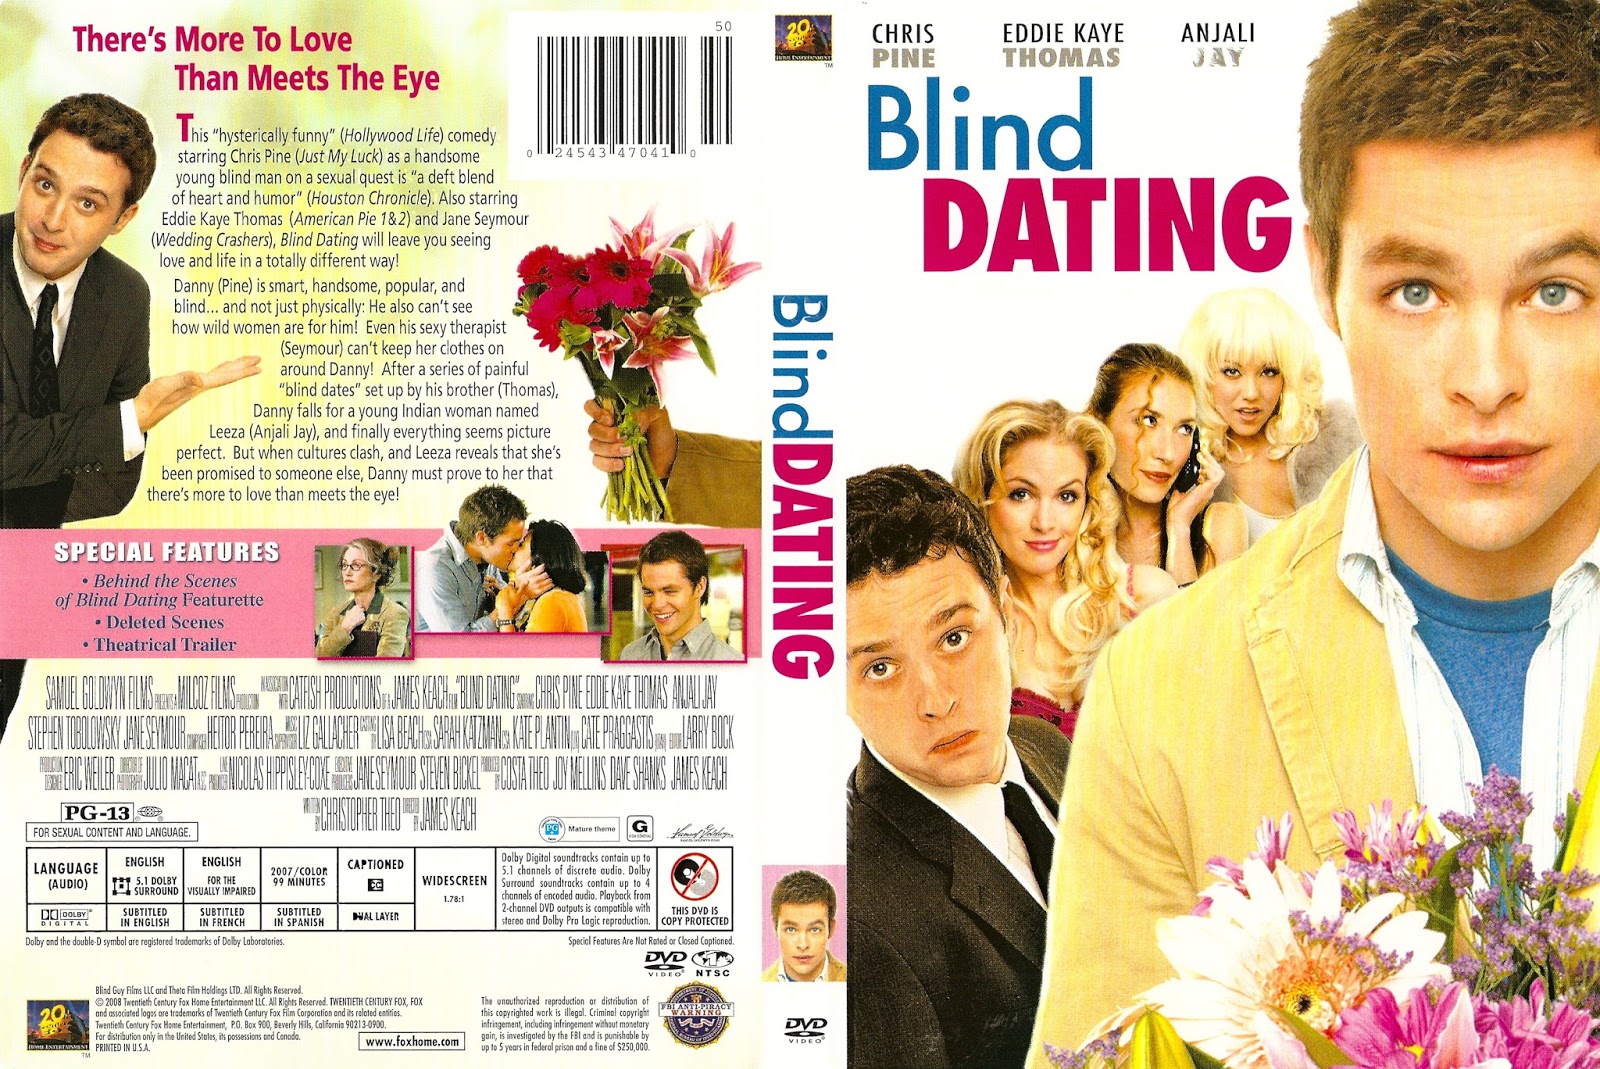 Blind dating